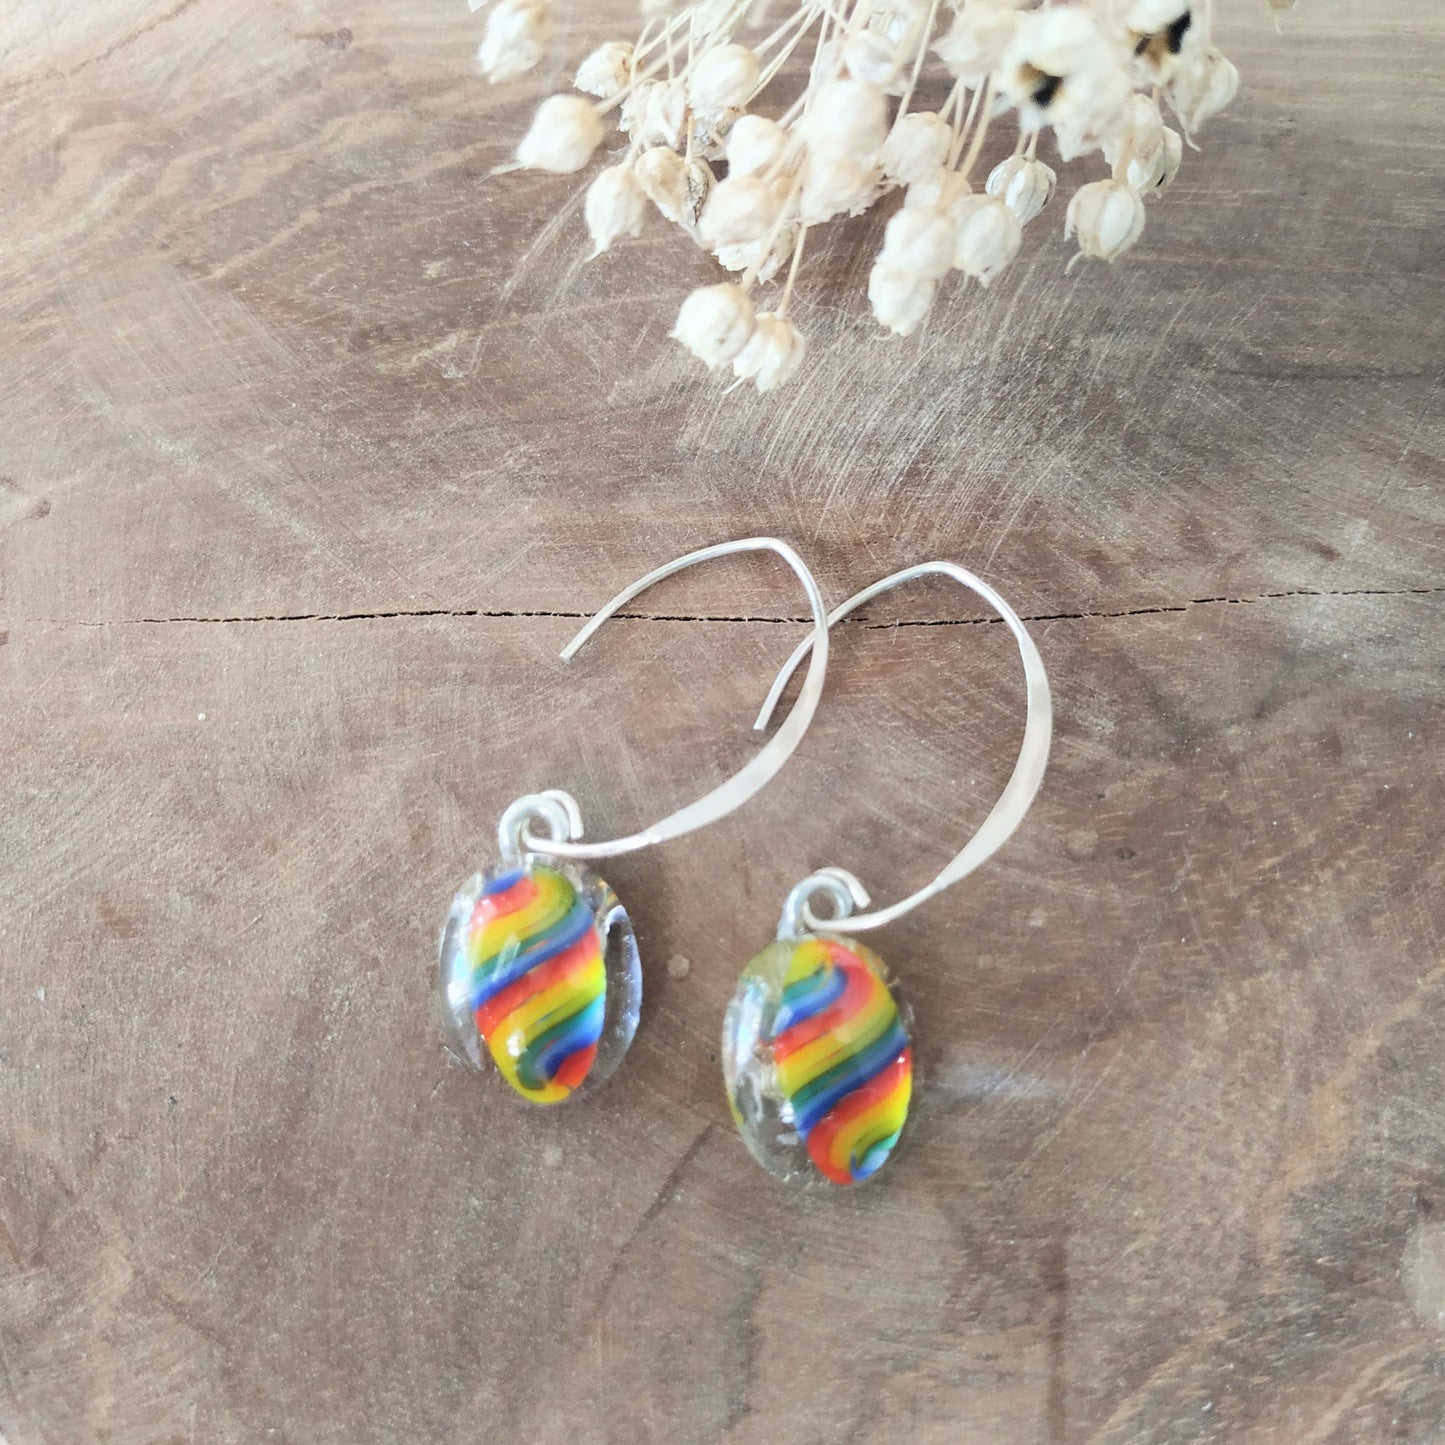 Rainbow earrings on wood with wildflower 